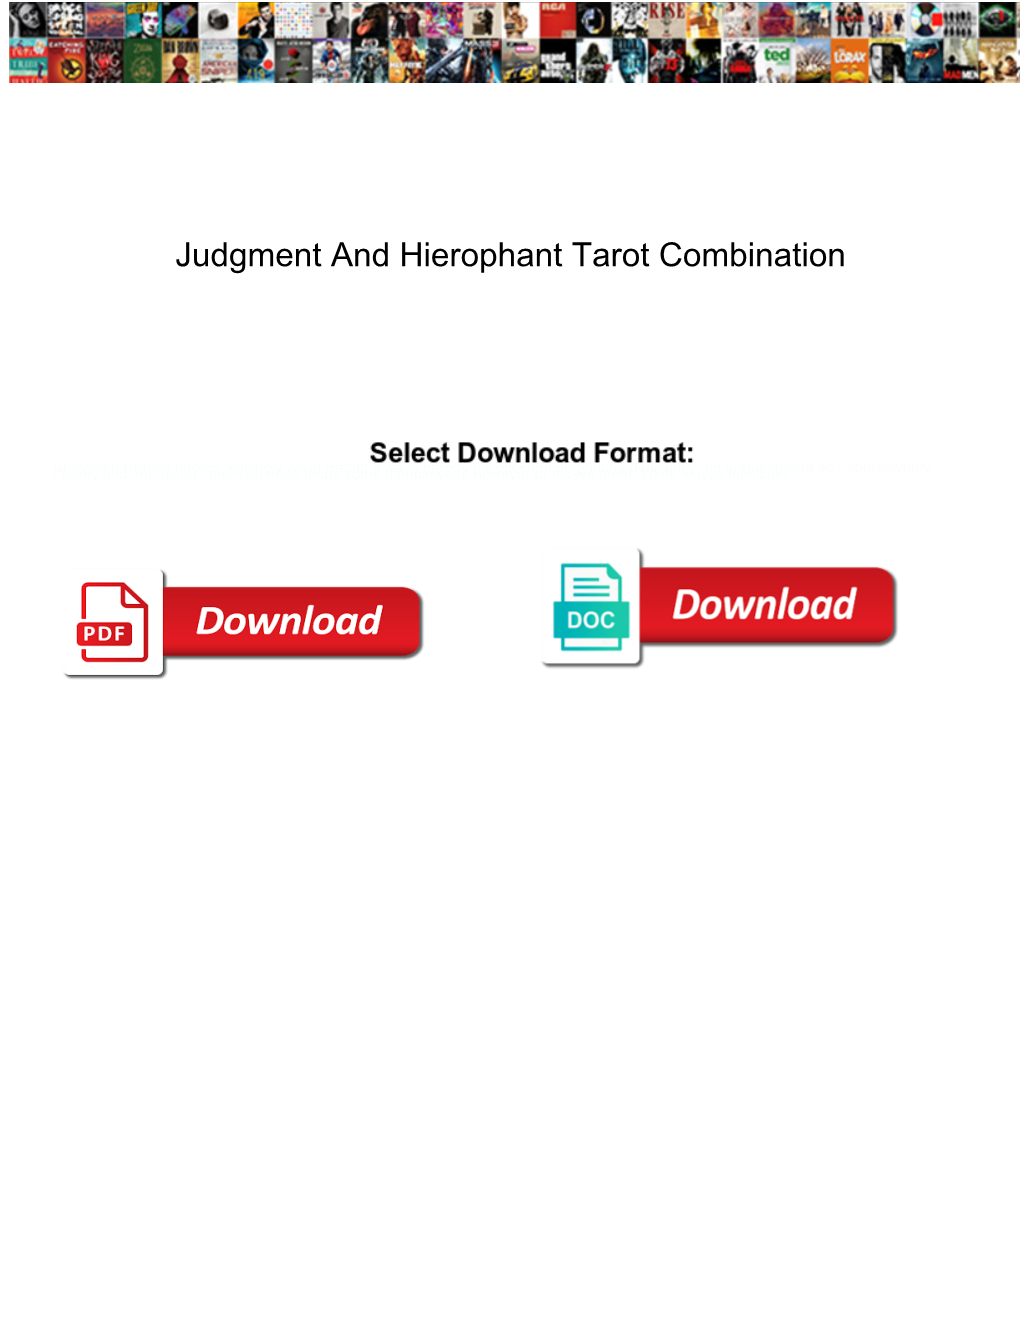 Judgment and Hierophant Tarot Combination